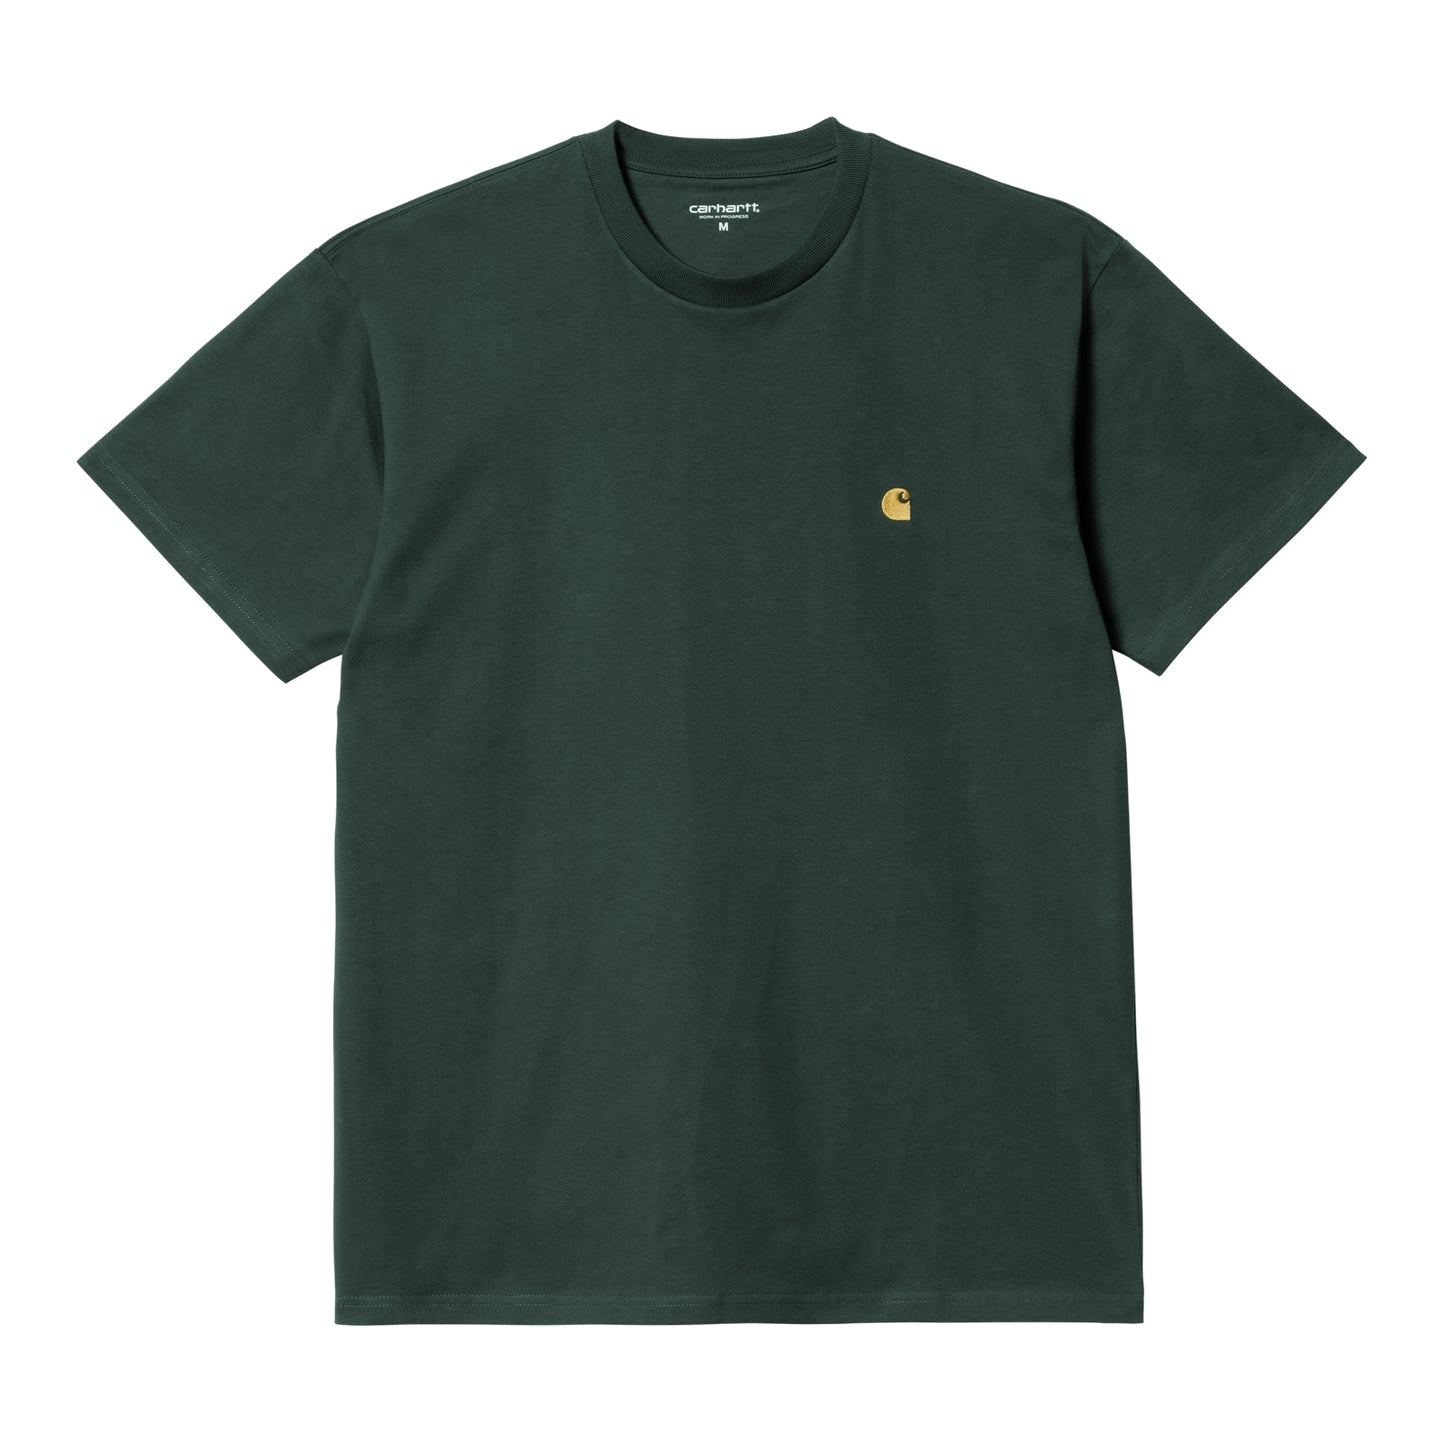 Carhartt WIP Chase Camiseta Enebro/Oro